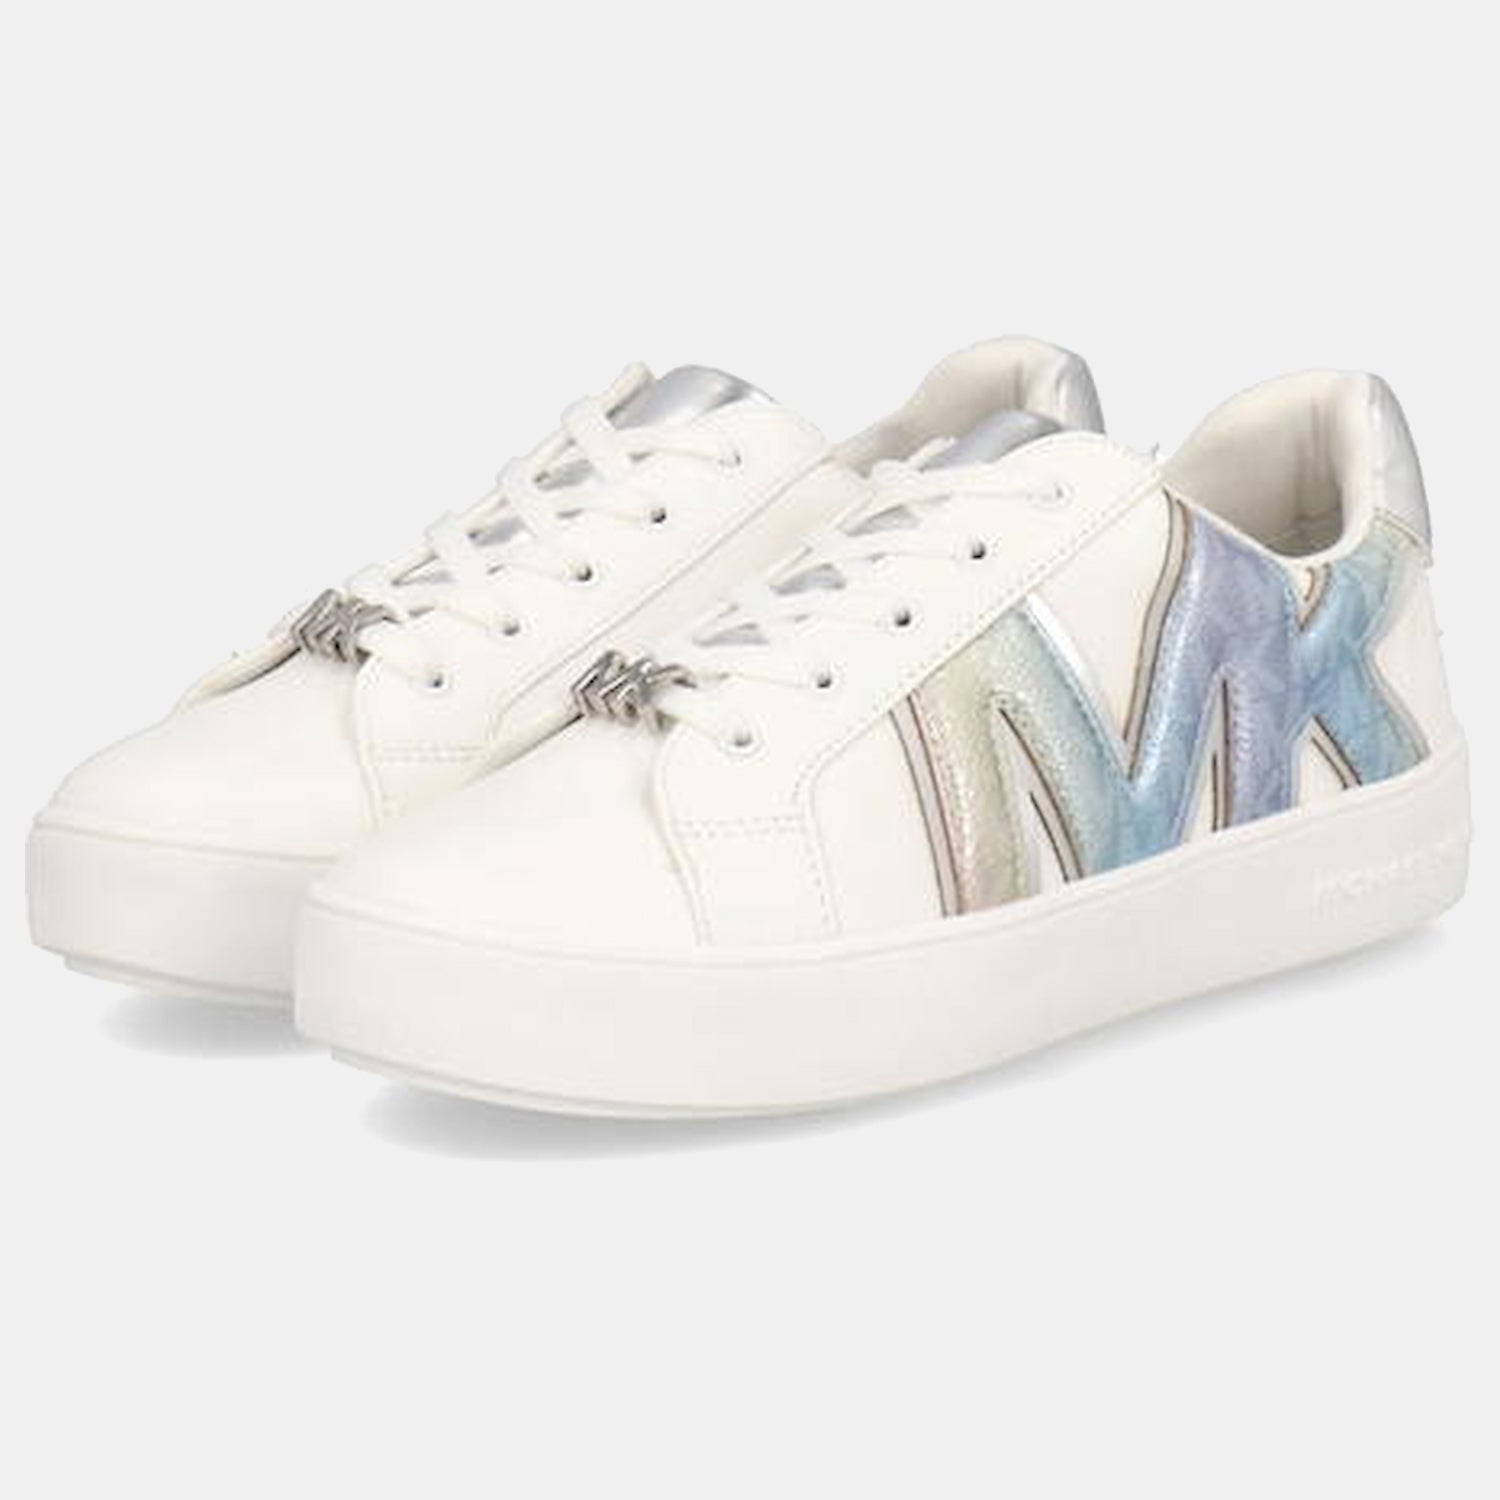 Michael Kors Sapatilhas Sneakers Shoes Jordana Airin White Mult Branco Multi_shot1